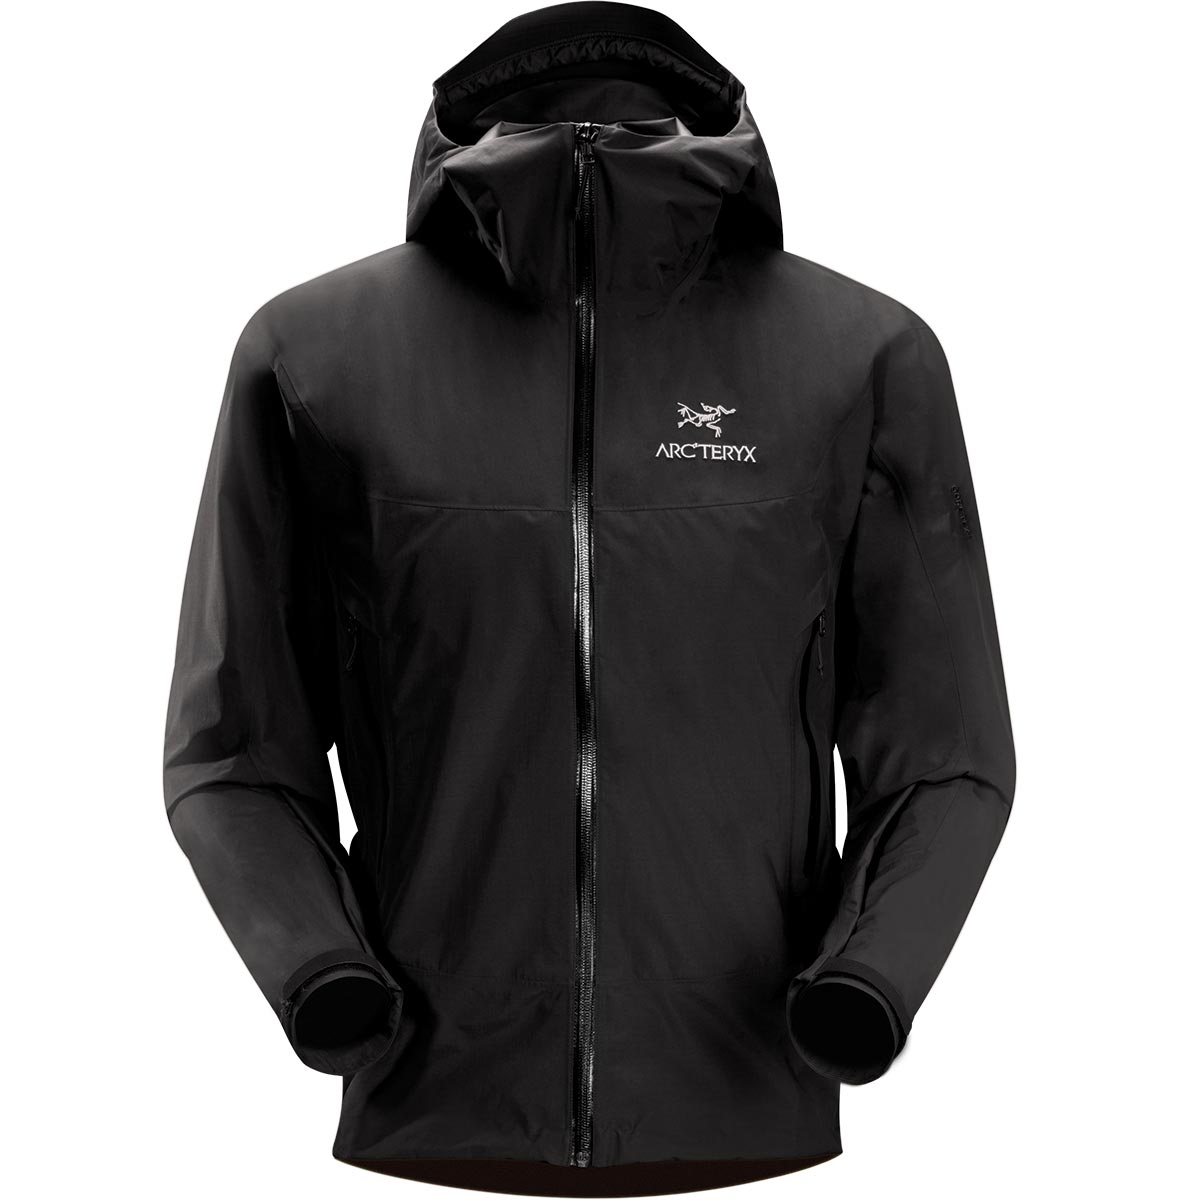 Arc'teryx Beta SL Jacket, men's, discontinued Fall 2018 model 